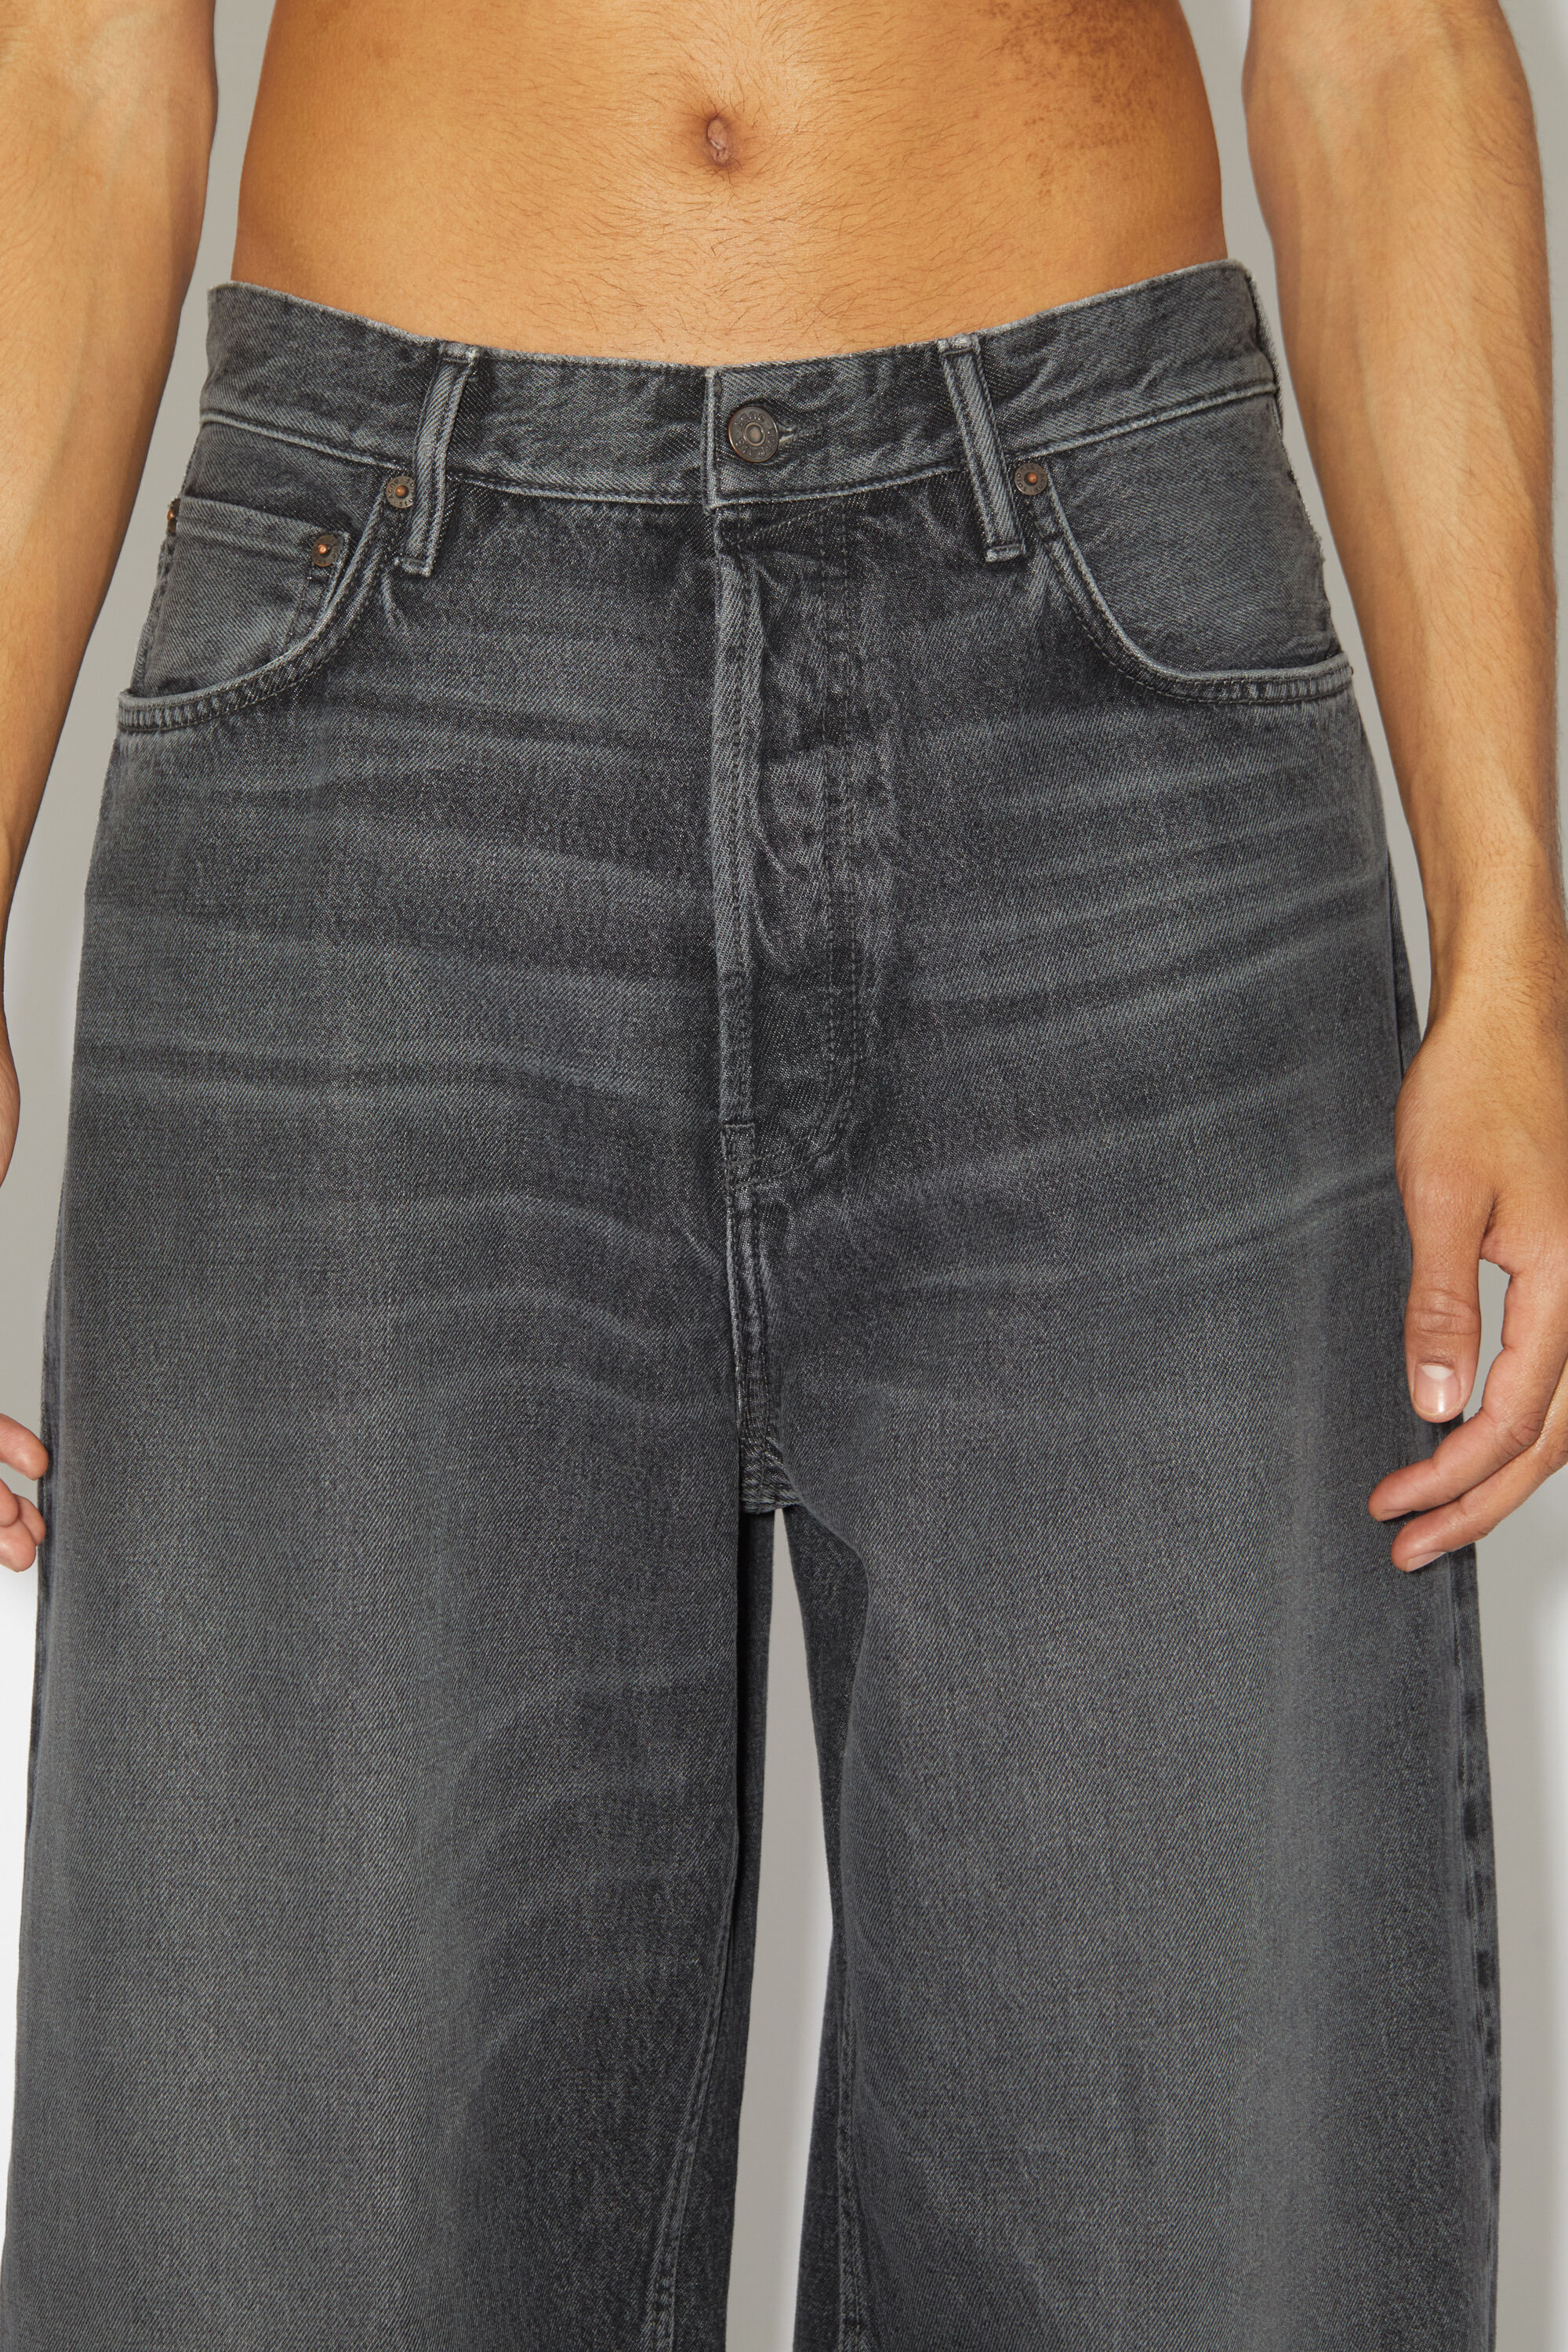 Acne Studios Loose Fit Jeans 1989 32-30これ以上値下げは厳しいですよね